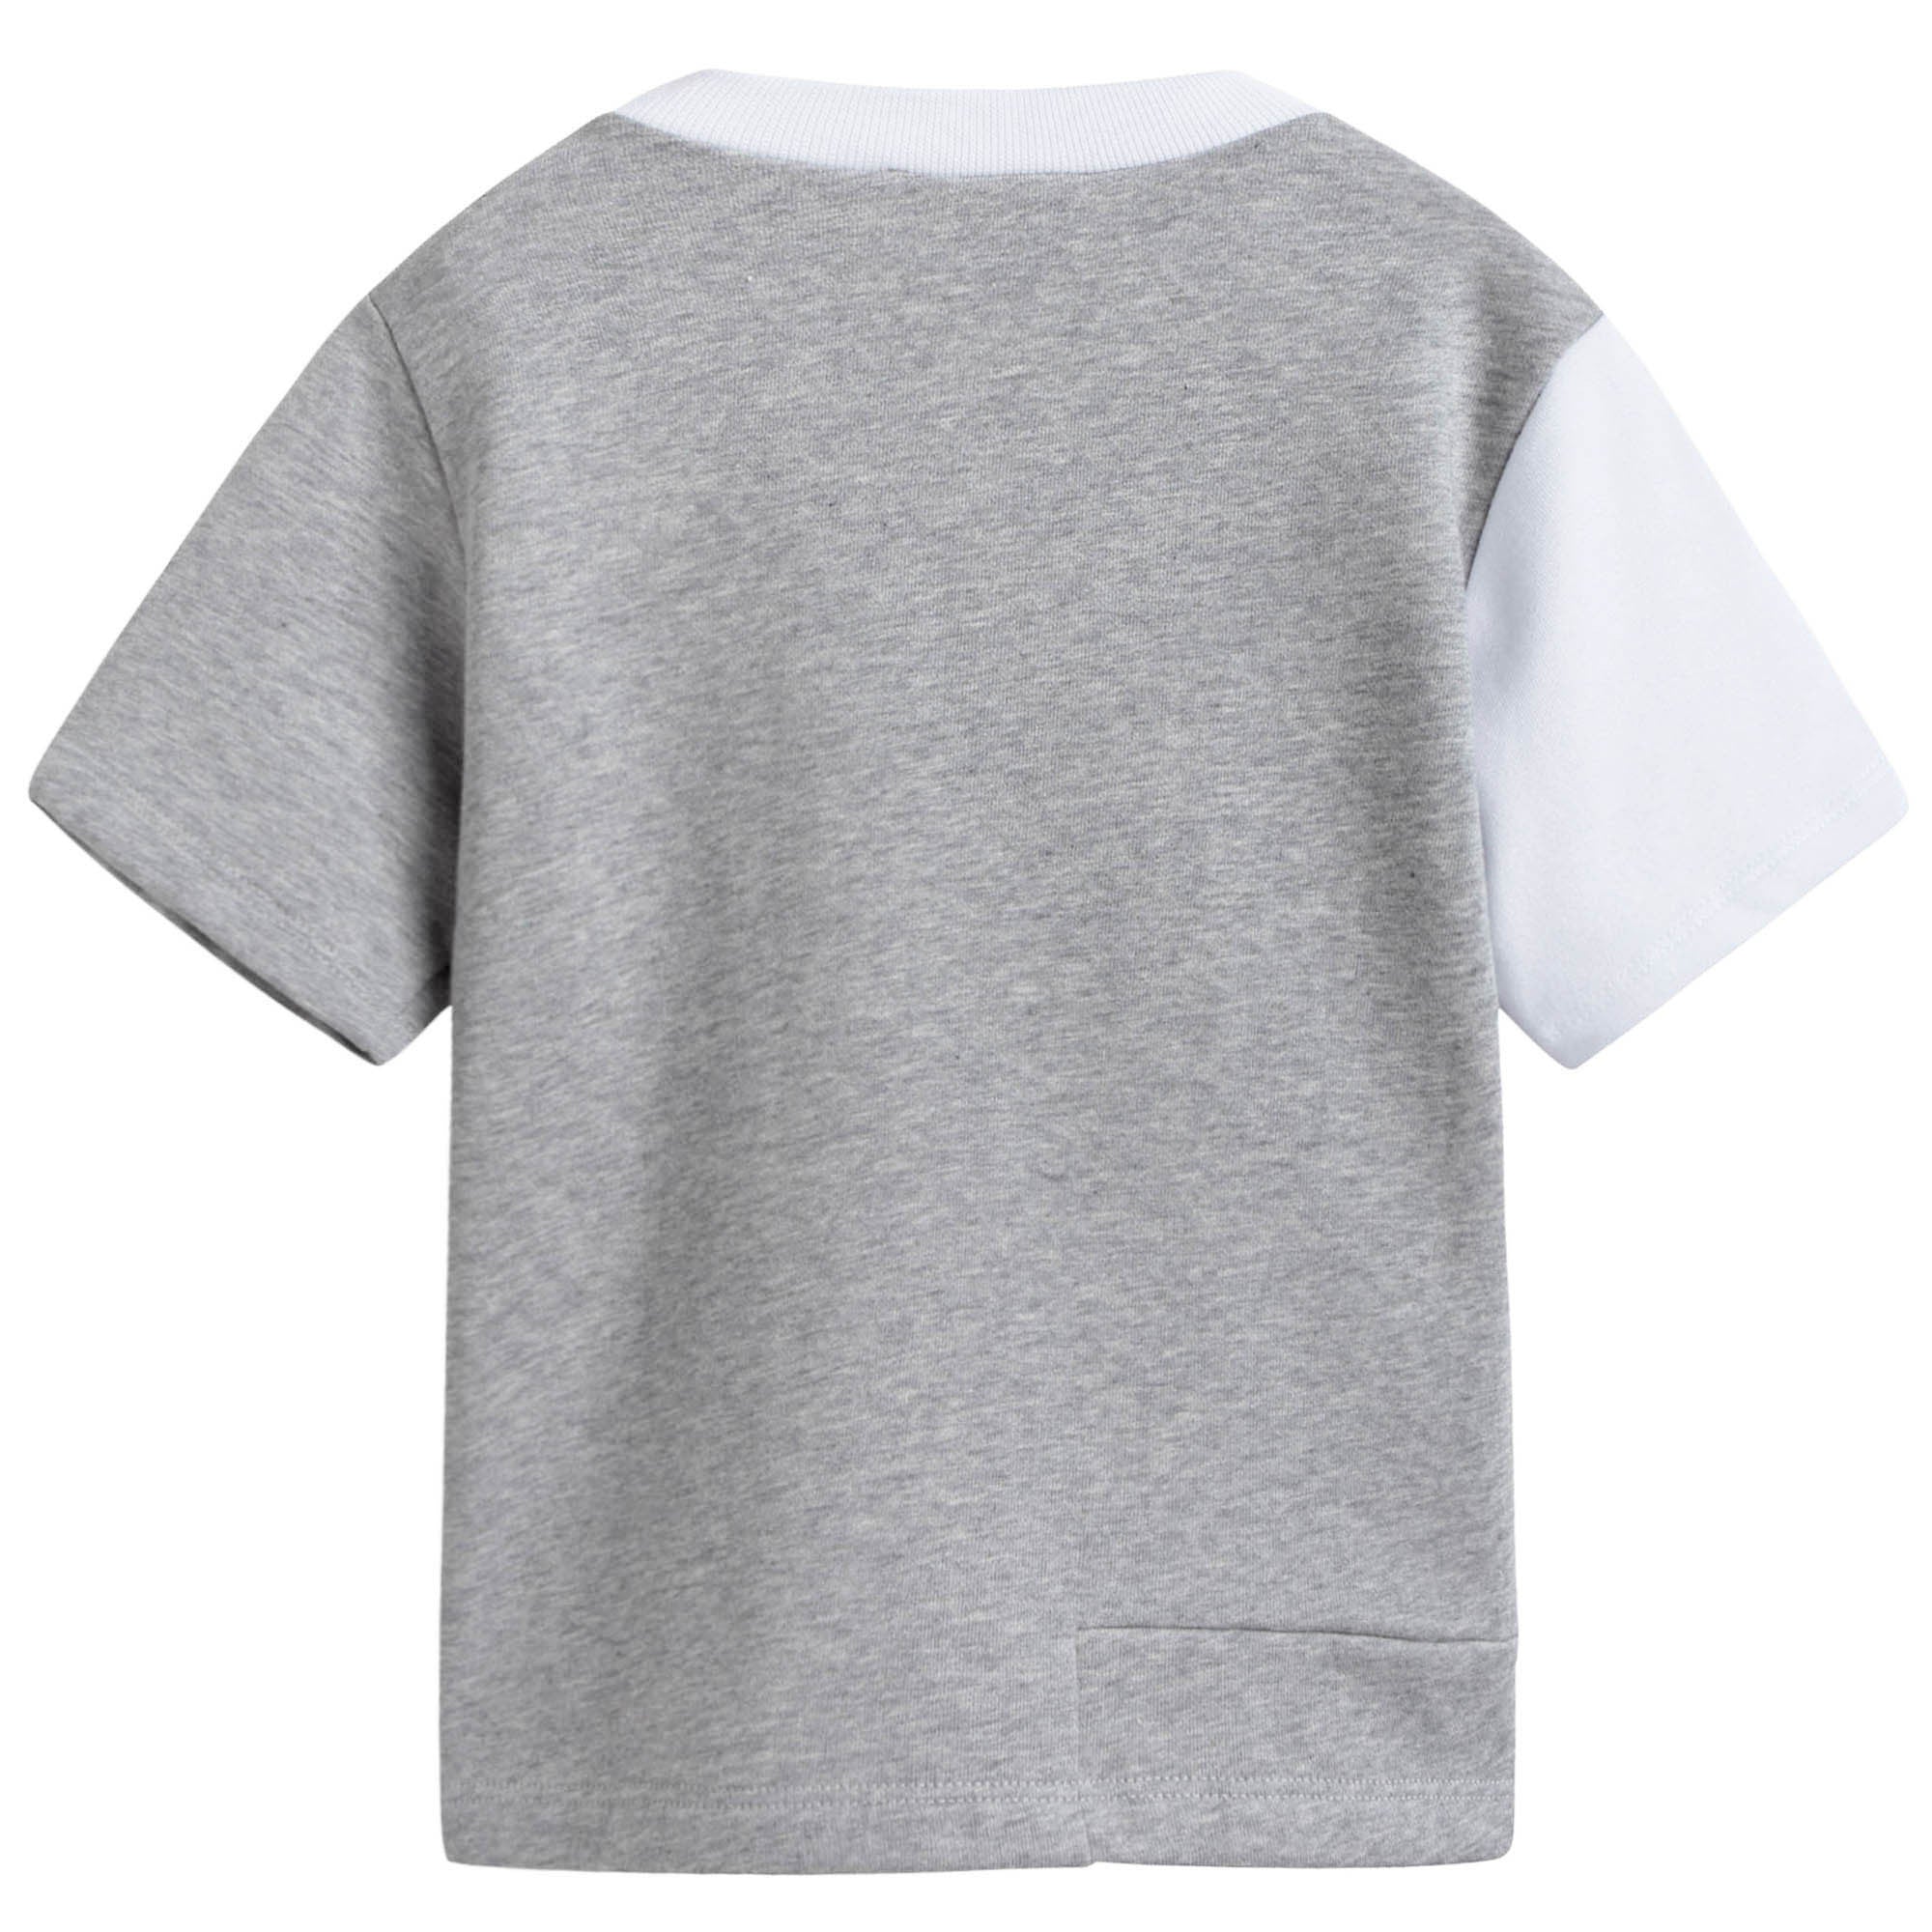 Girls Grey & White Printed Cotton T-shirt